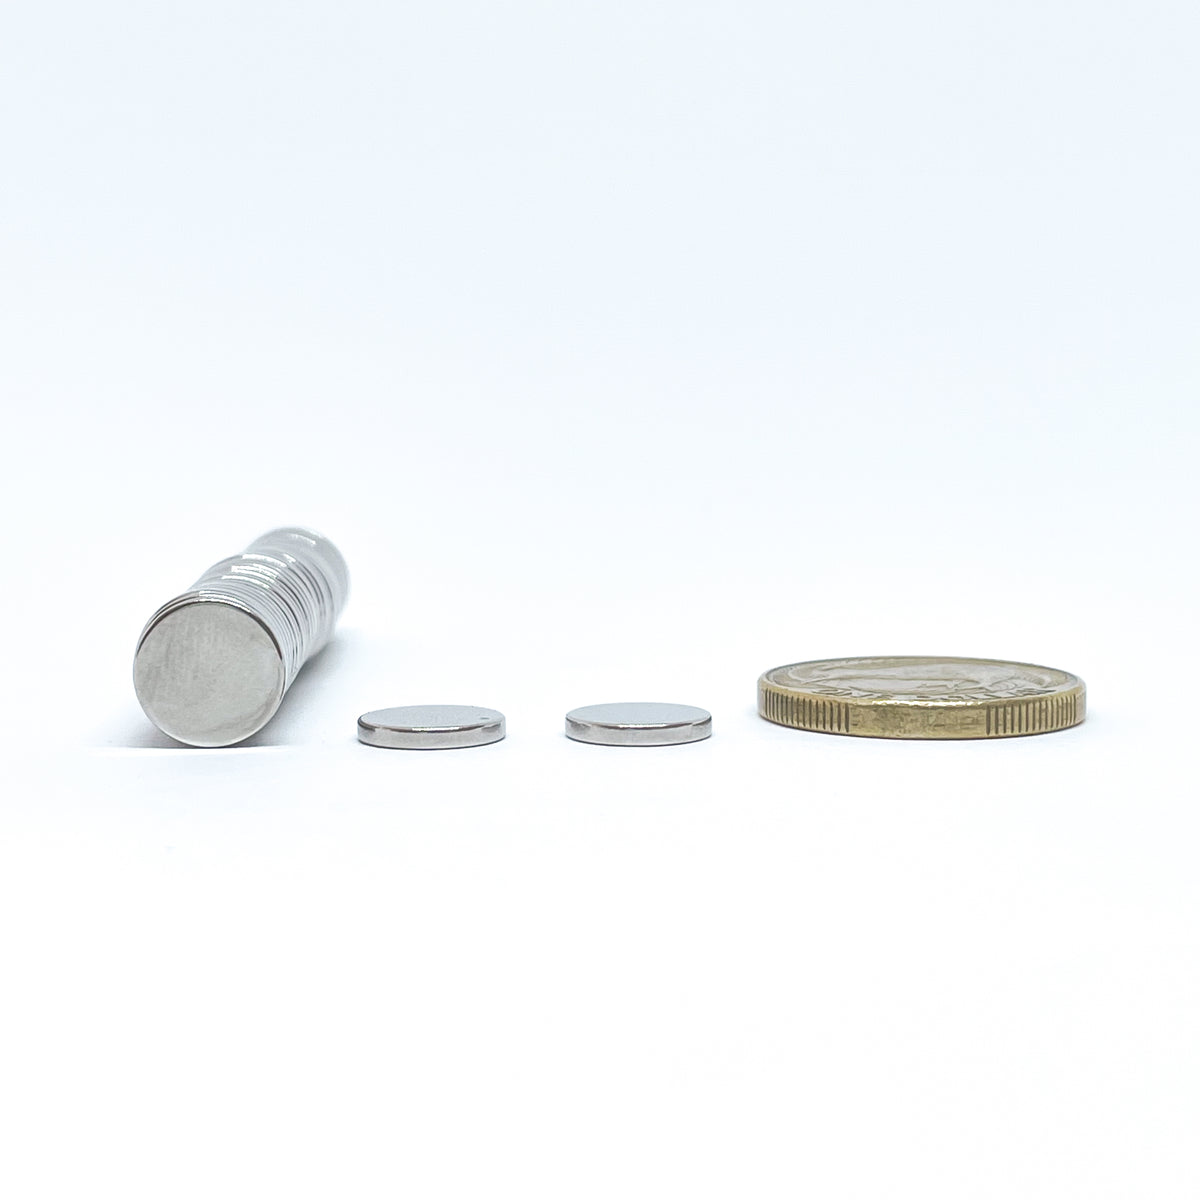 DCIC - Coppia Magneti Adesivi Ultra Forti - Diam 10 mm